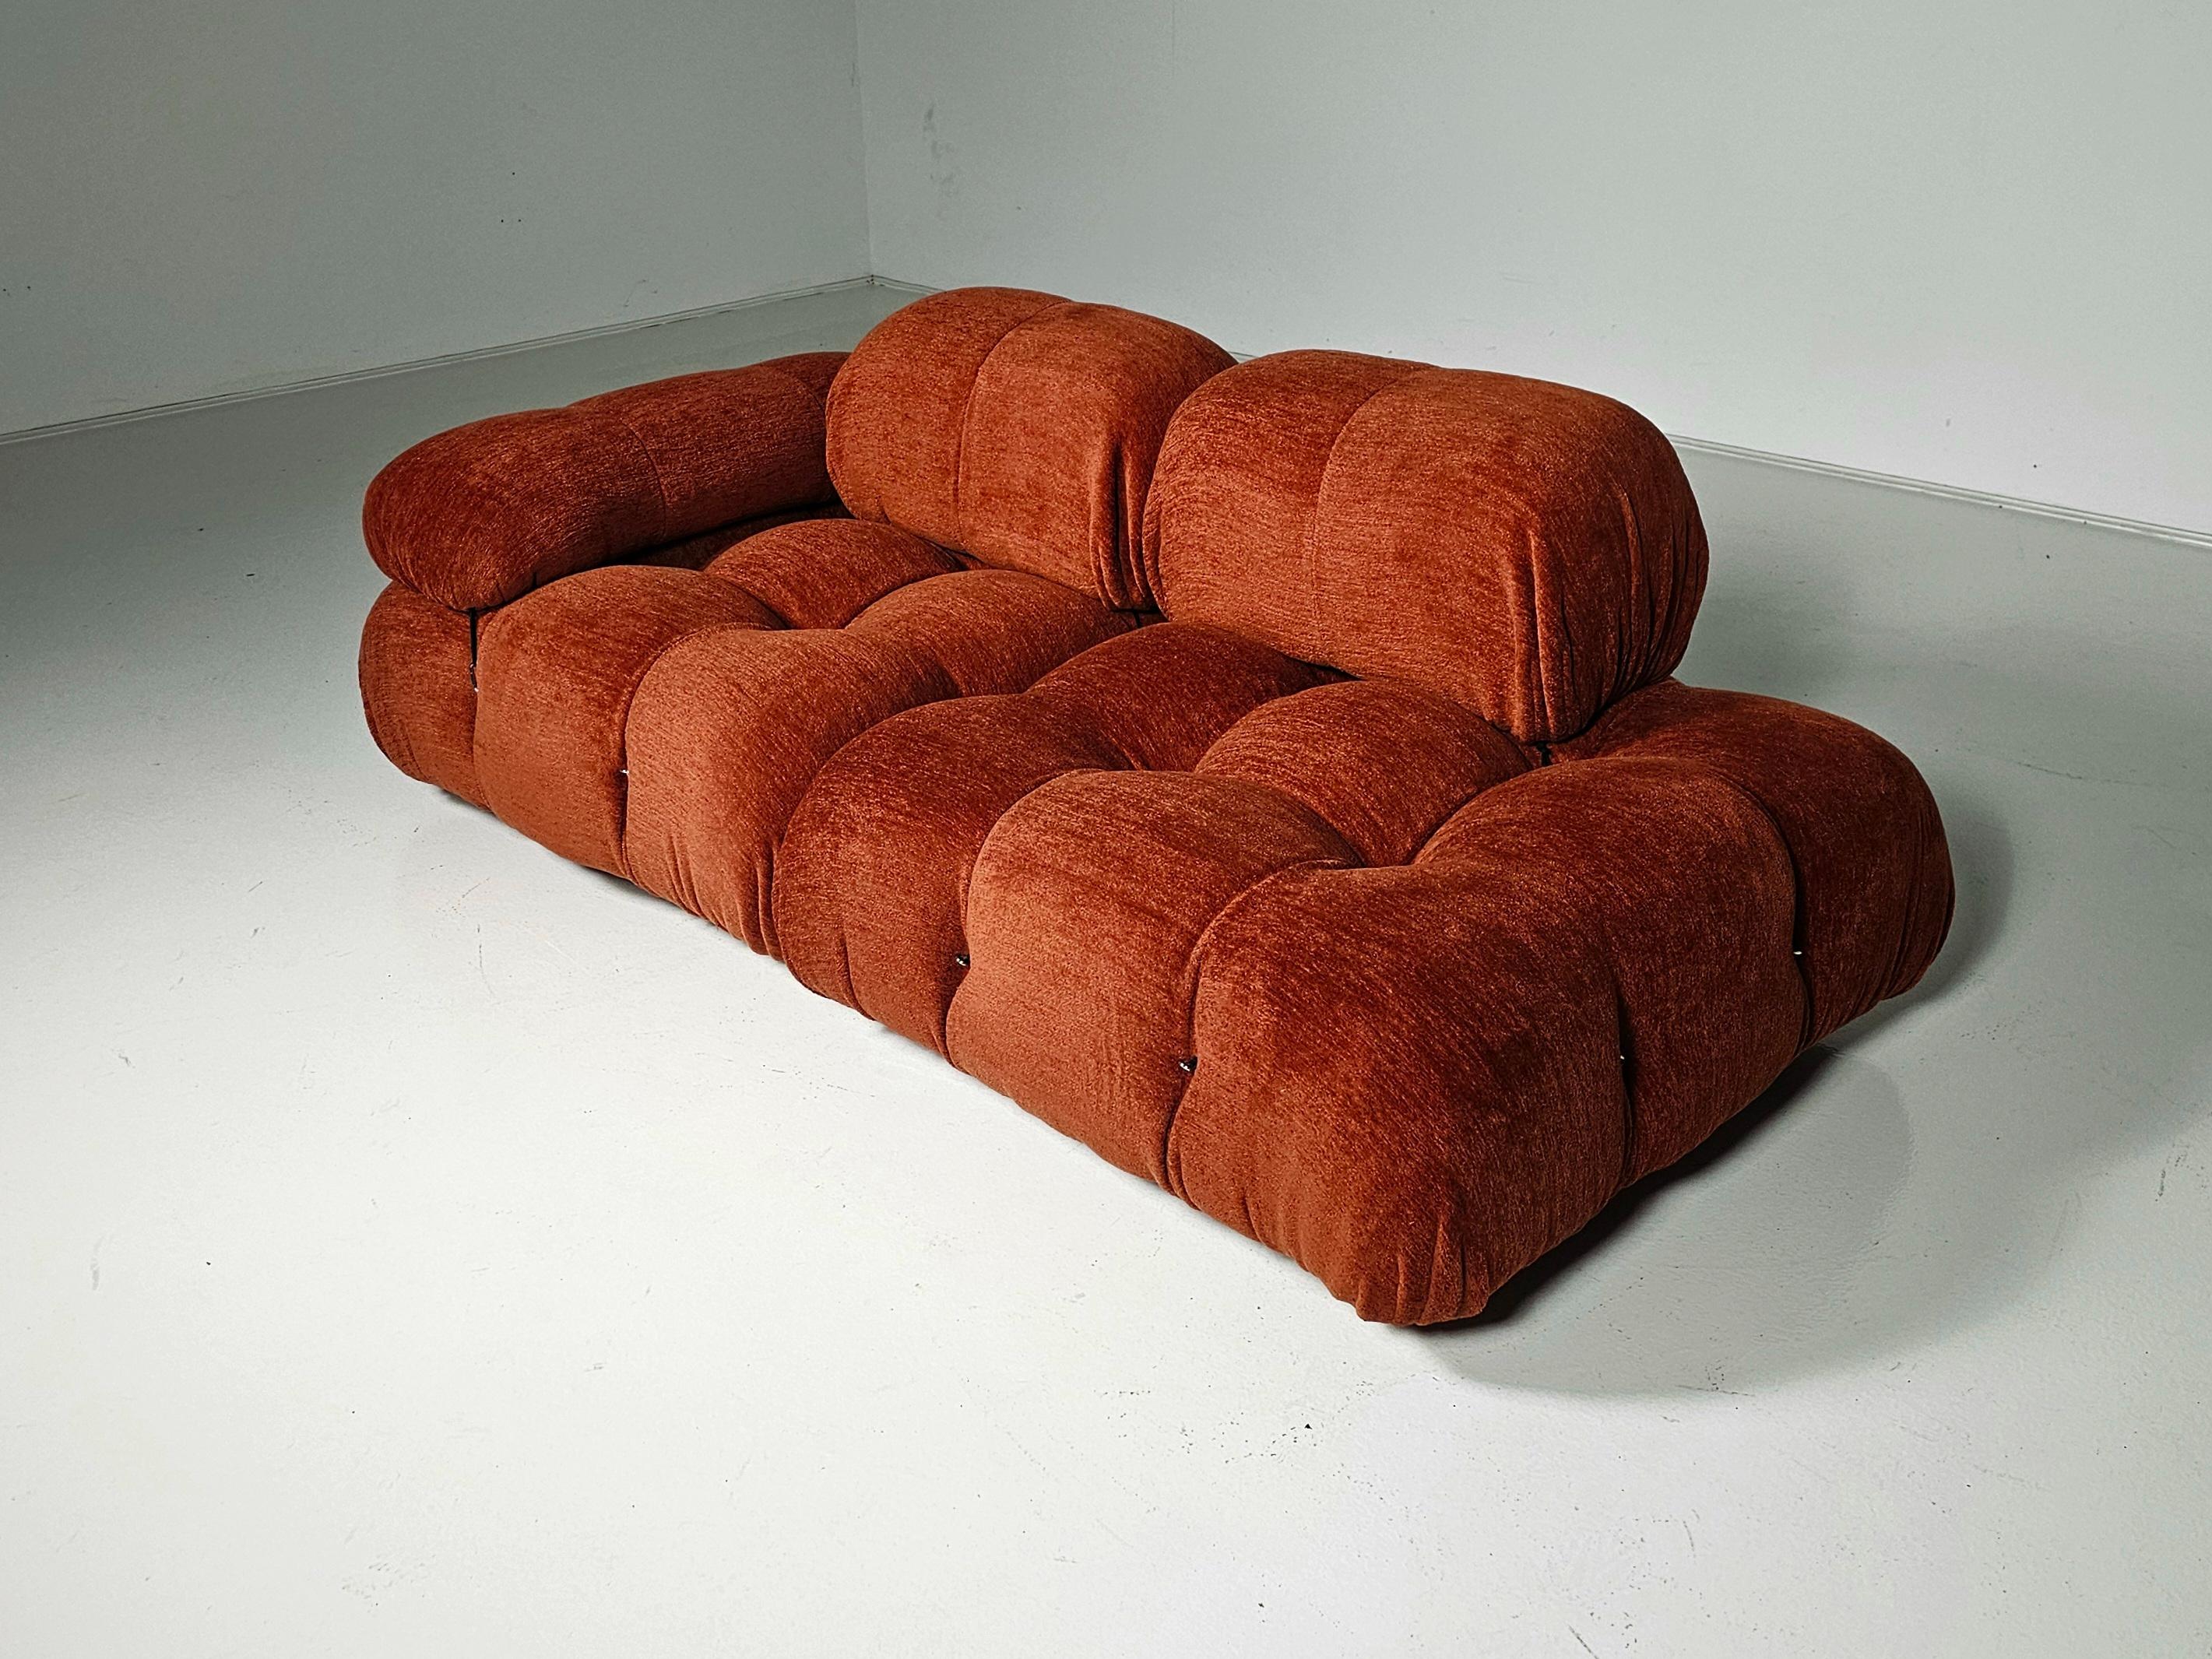 European Camaleonda chaise longues sofa by Mario Bellini for C&B Italia, 1970s